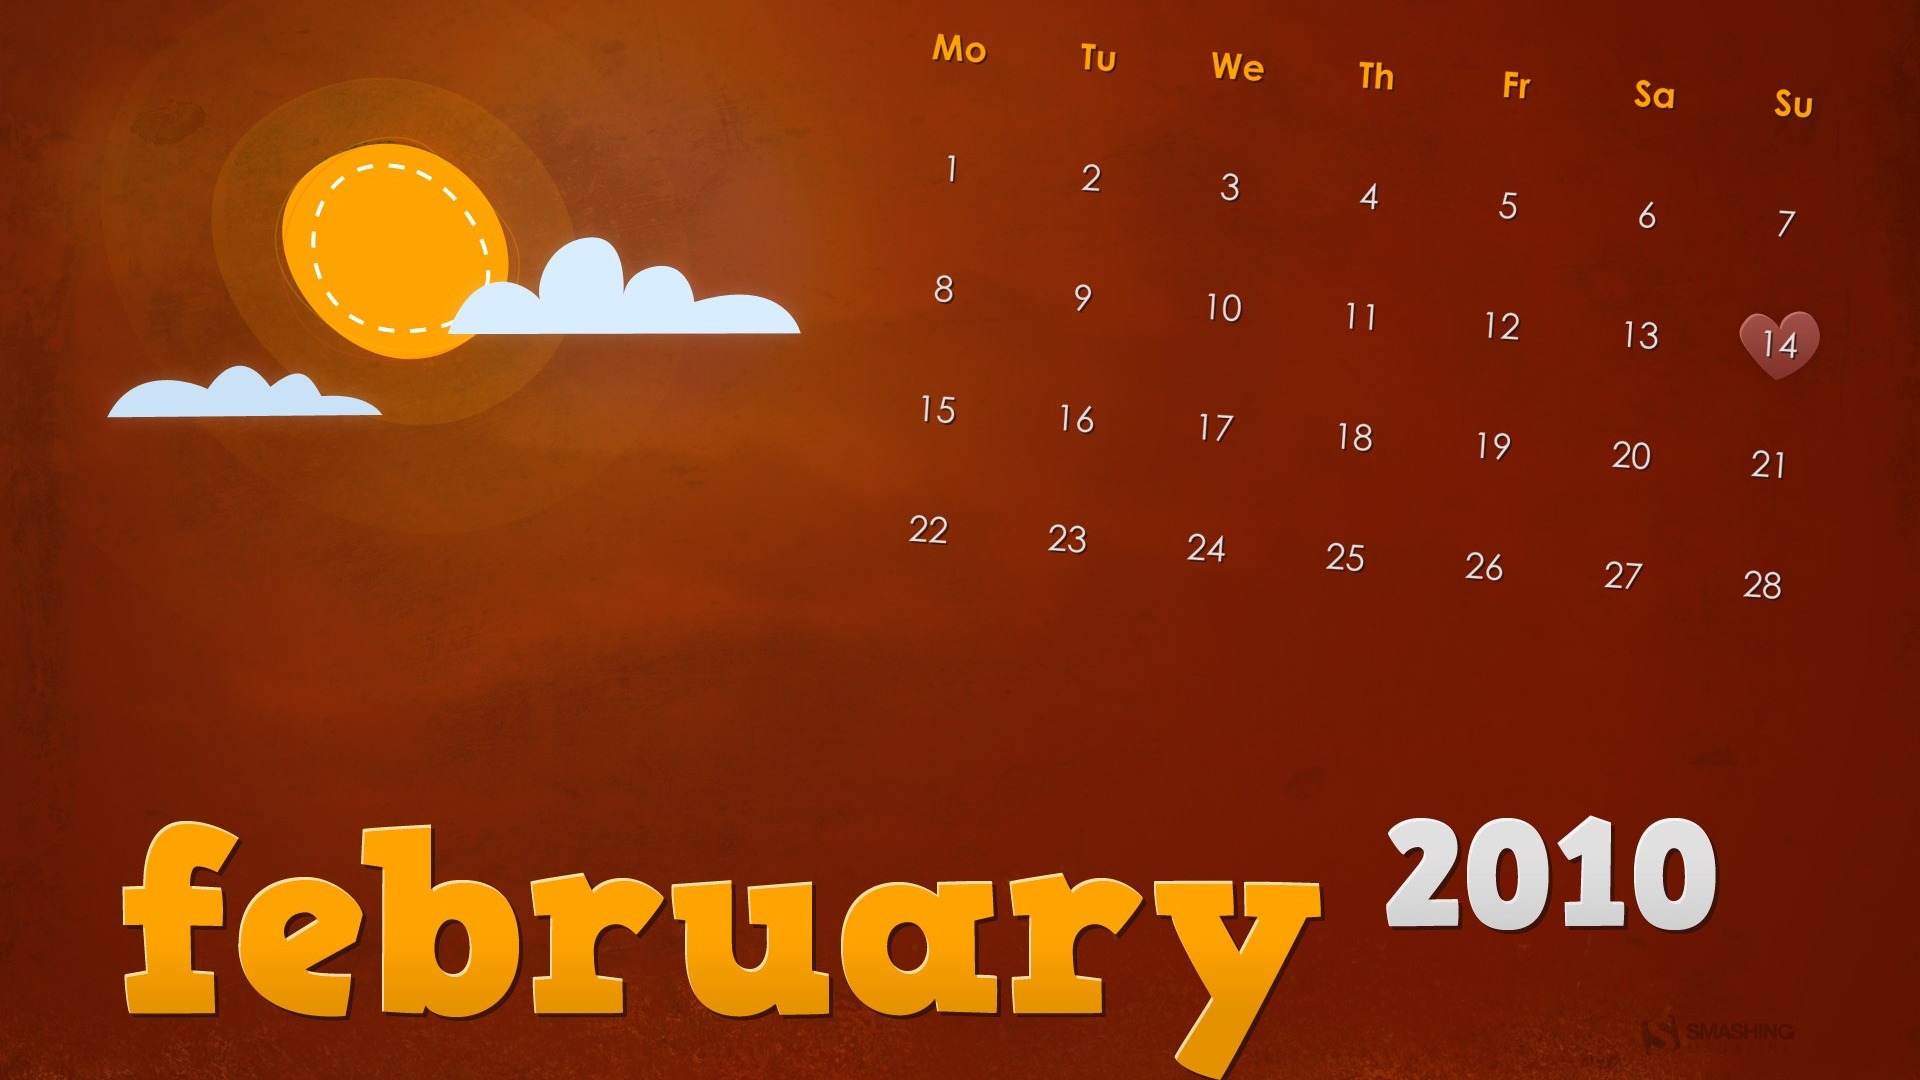 Februar 2010 Kalender Wallpaper kreative #12 - 1920x1080